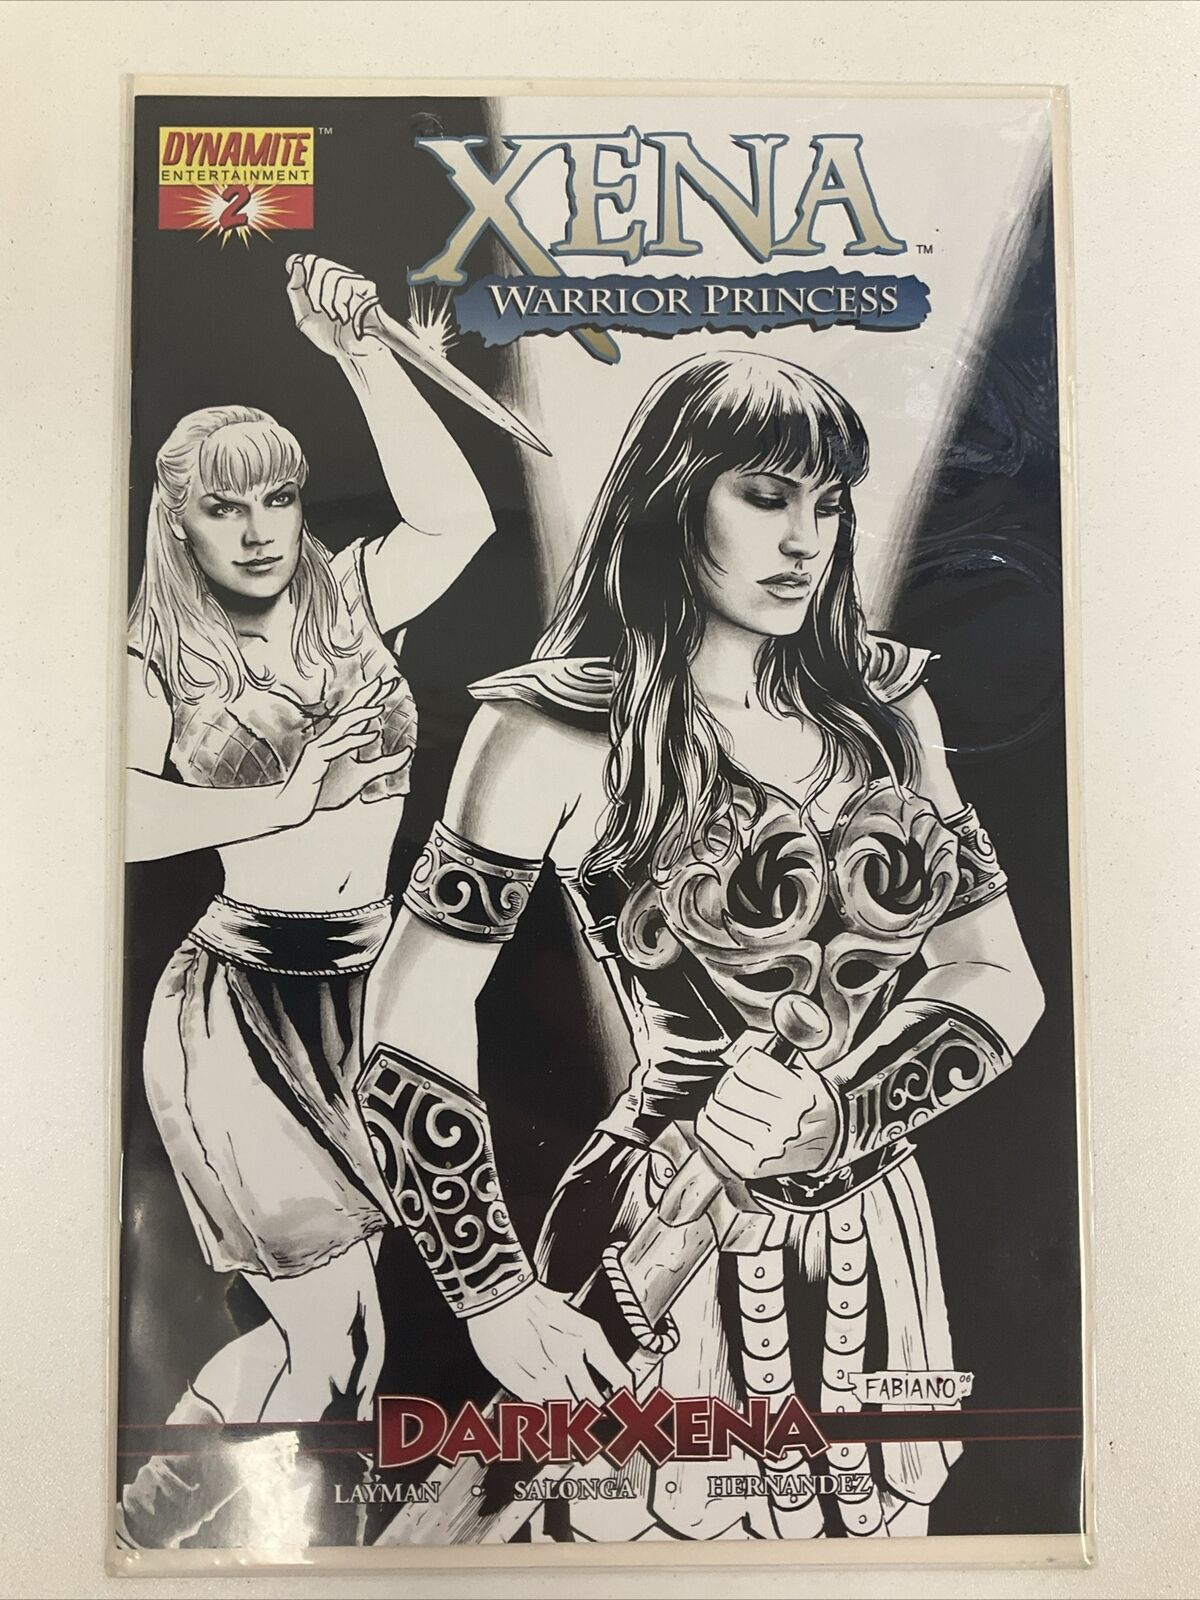 XENA WARRIOR PRINCESS DARK XENA #2 1:12 BLACK AND WHITE VARIANT COVER